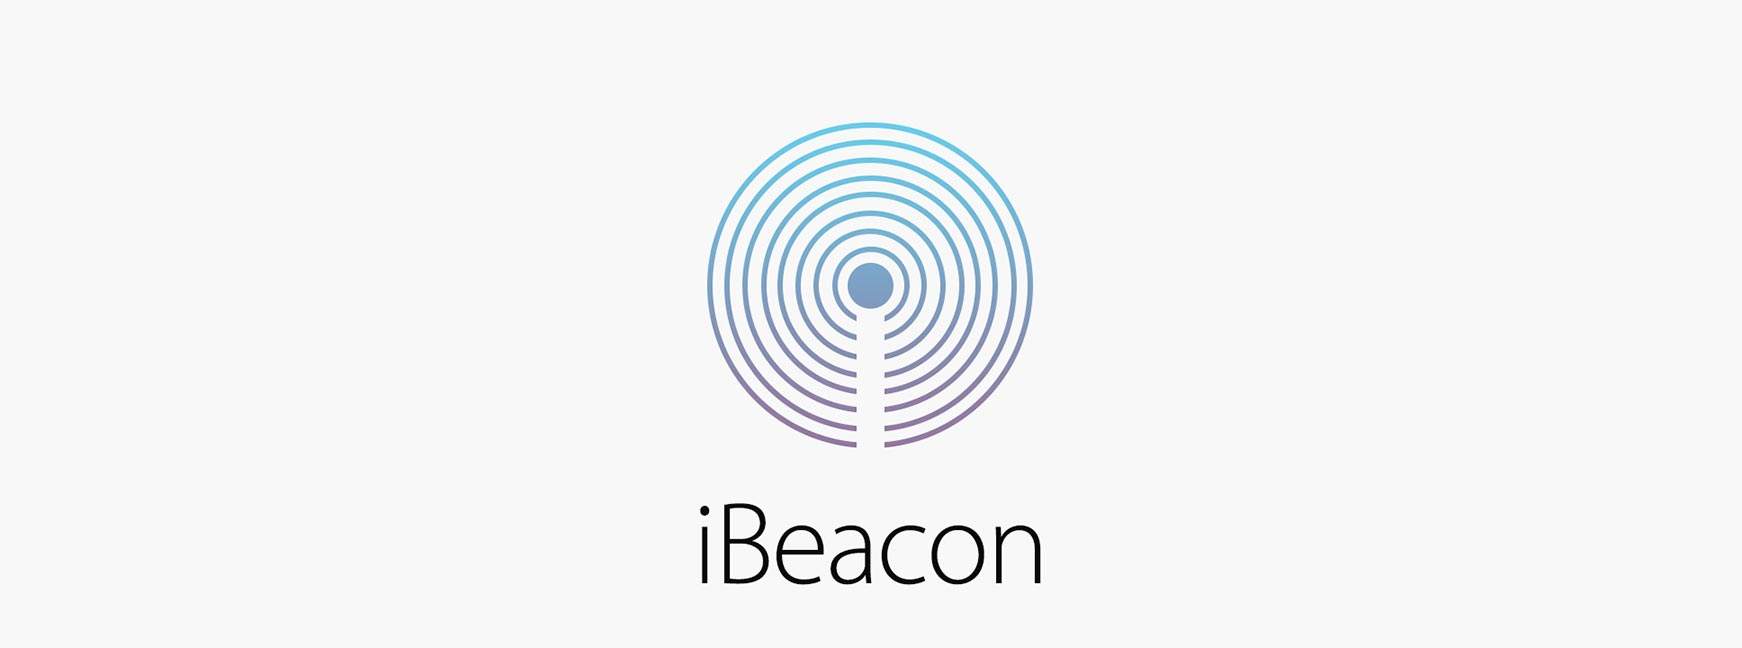 Die Schlacht der Beacons: Eddystone vs. iBeacon